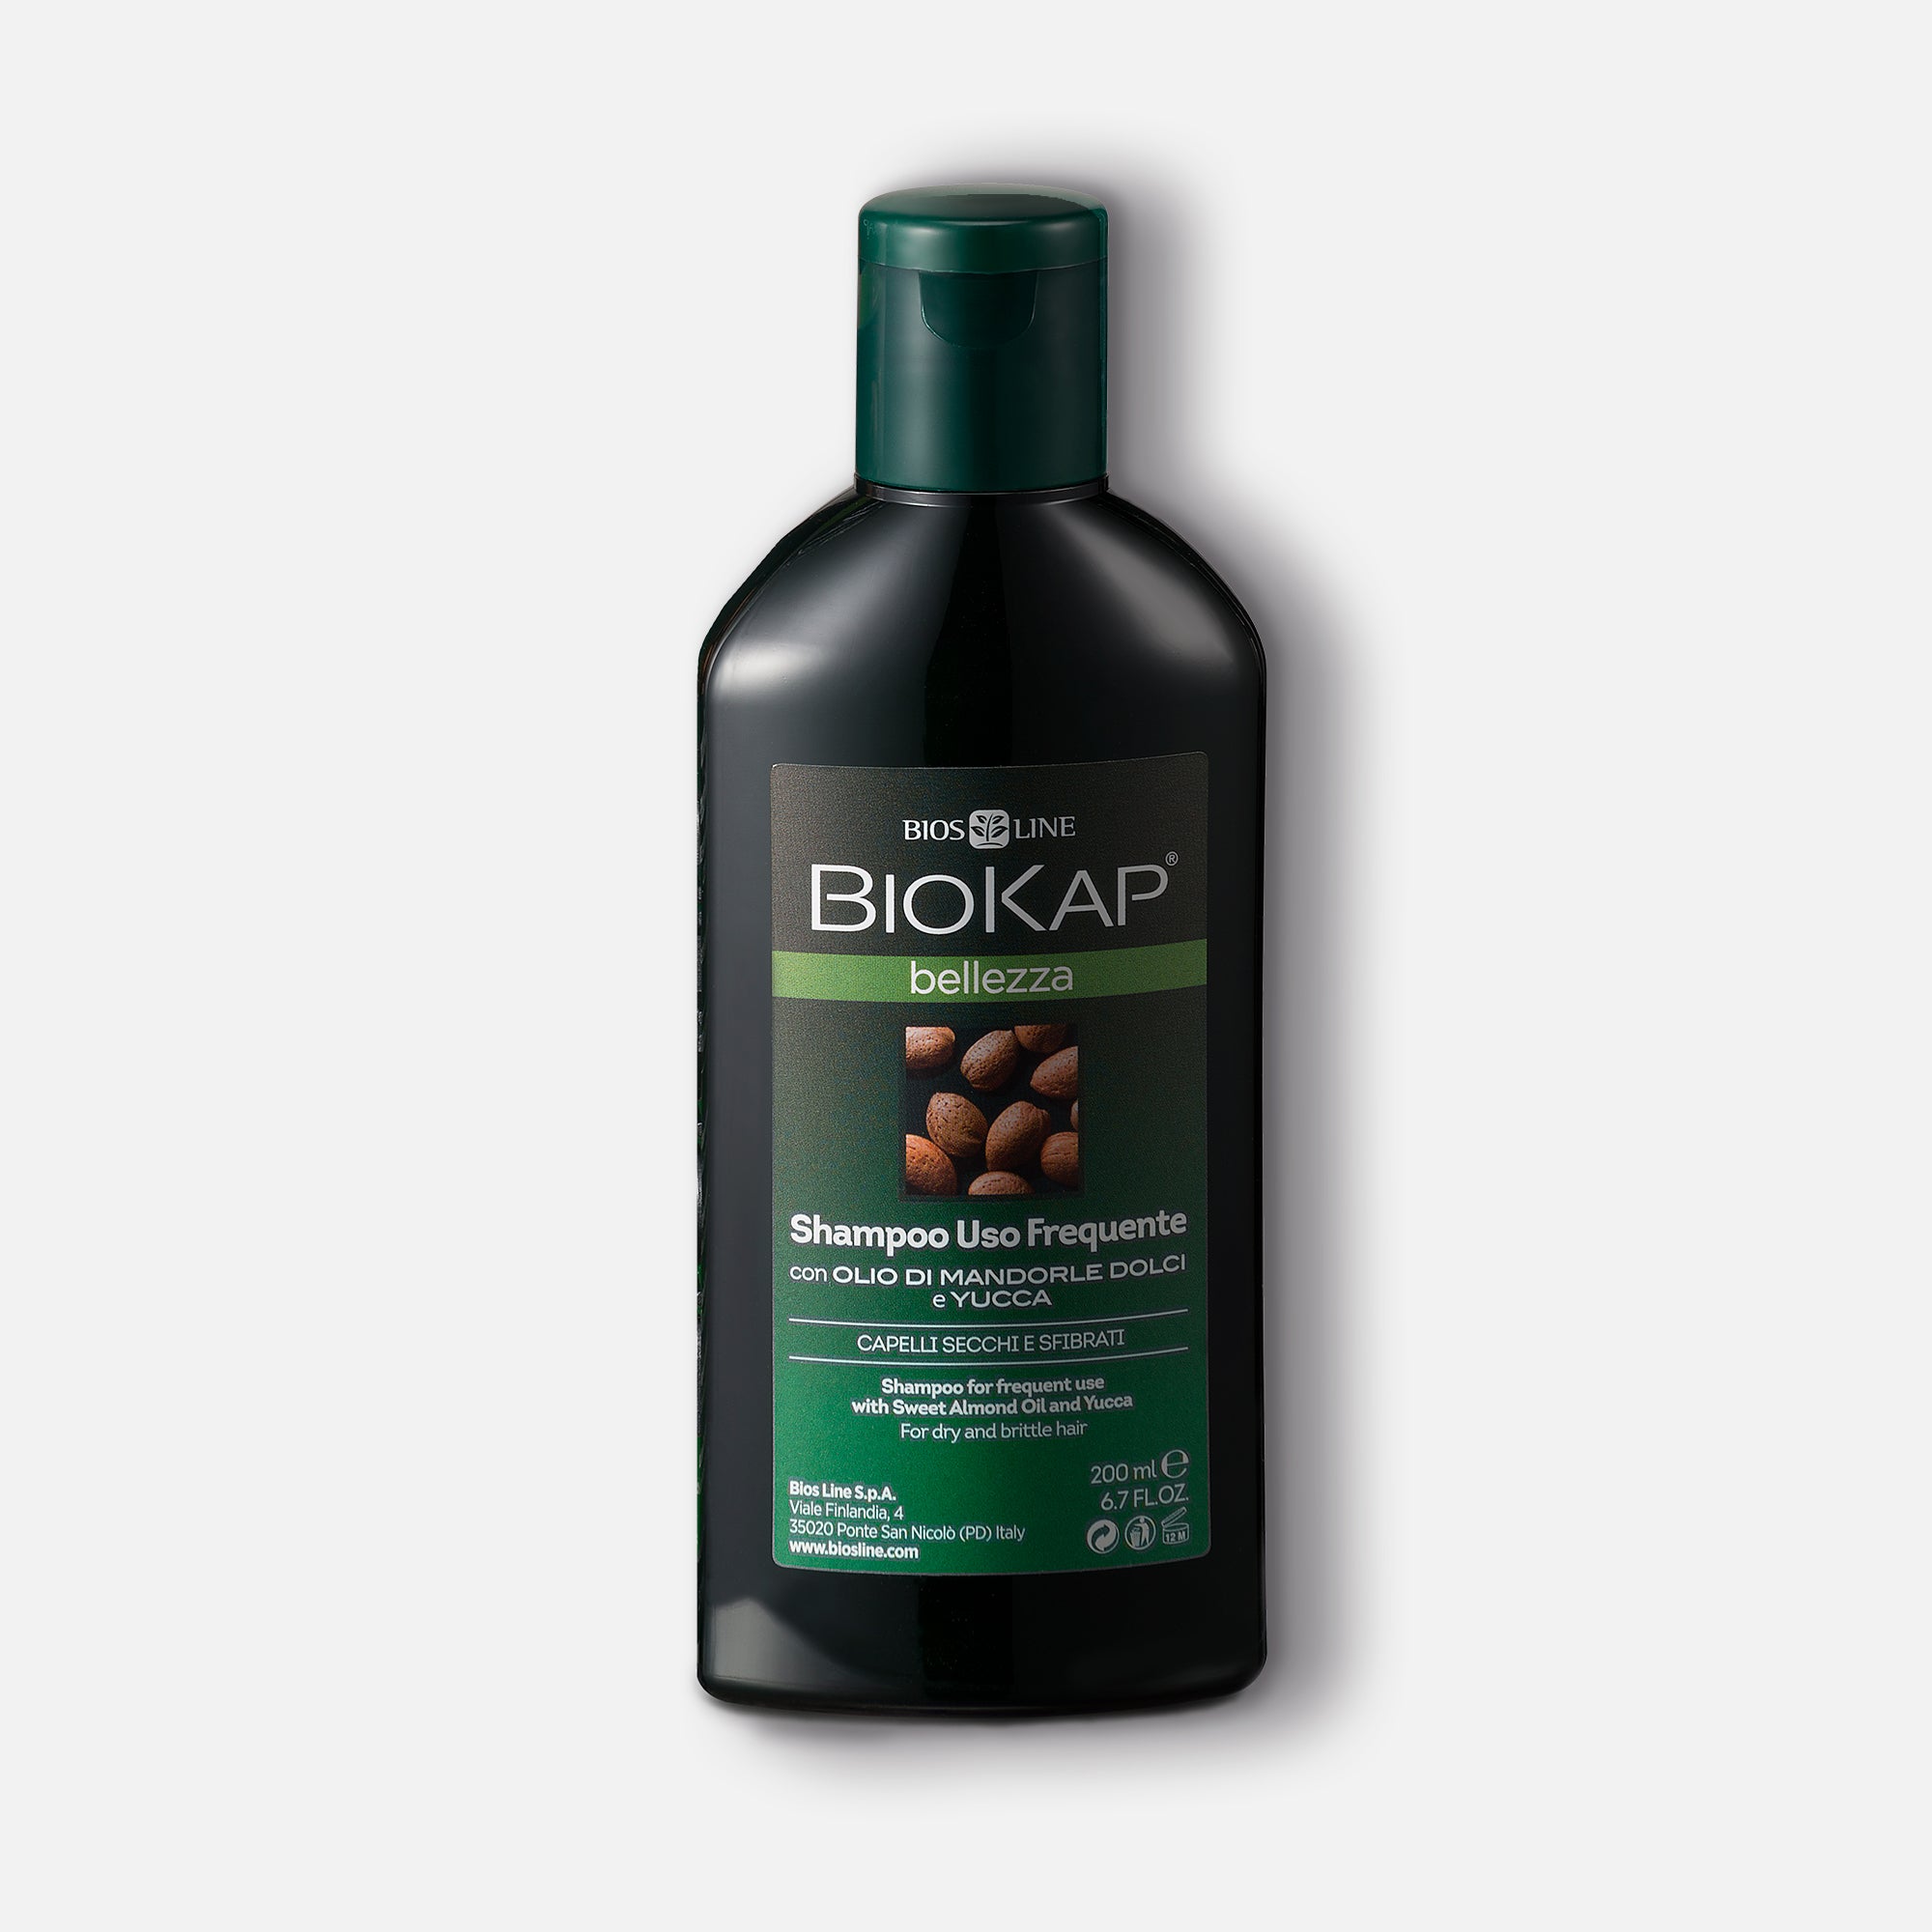 Biokap - Belleza - Shampoo reparador para cabelllo seco y dañado - uso frecuente  200 ml - ebeauty